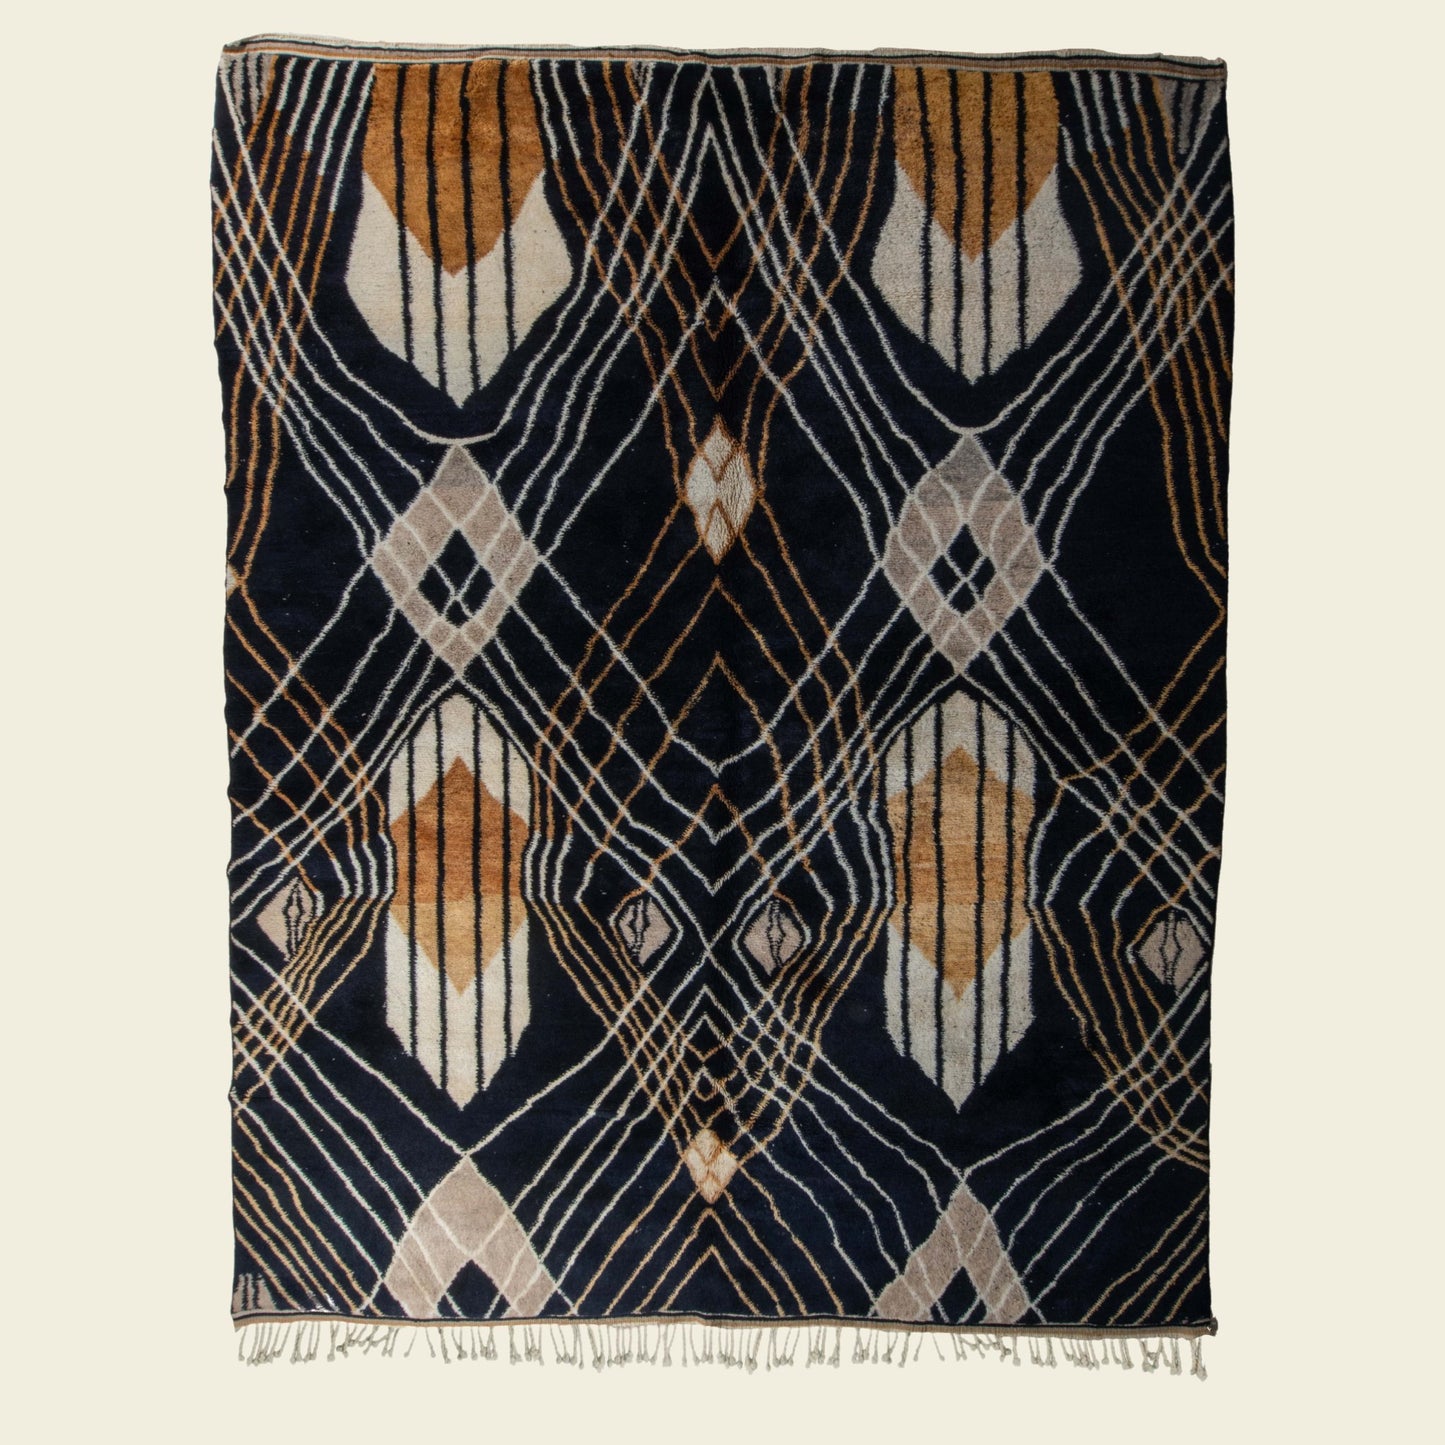 Contemporary Beni Mrirt Berber Rug 9'44" x 12'13" - 288 cm x 370 cm (Wool) - Dar Bouchaib Marrakech